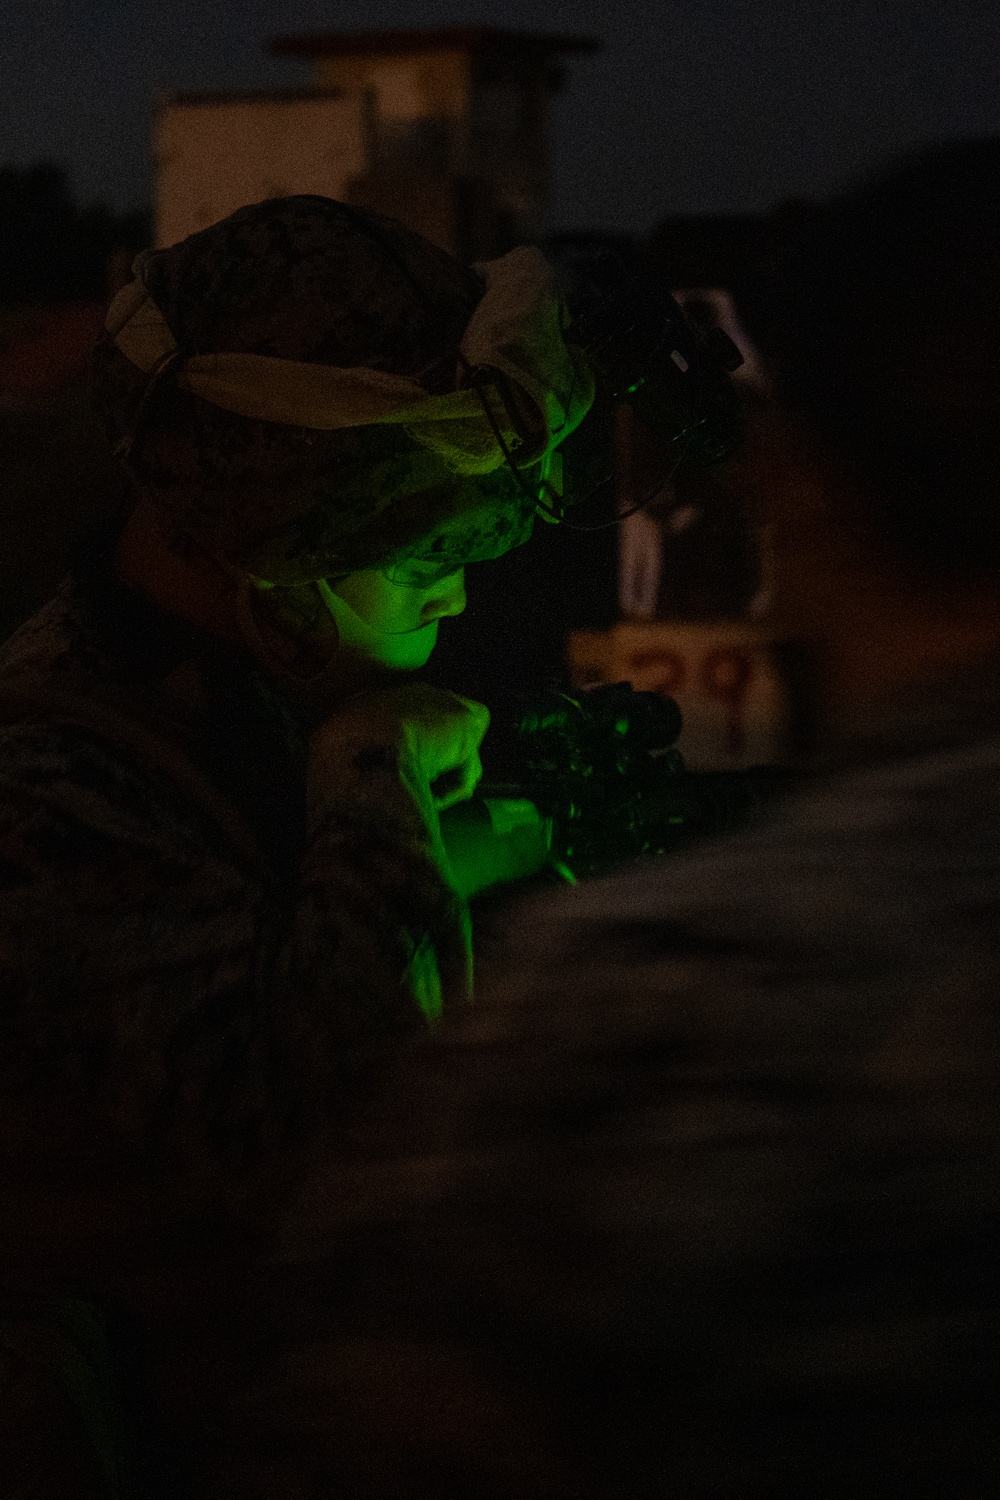 Hagåtña Fury 21: 3d LSB conducts night combat marksmanship range